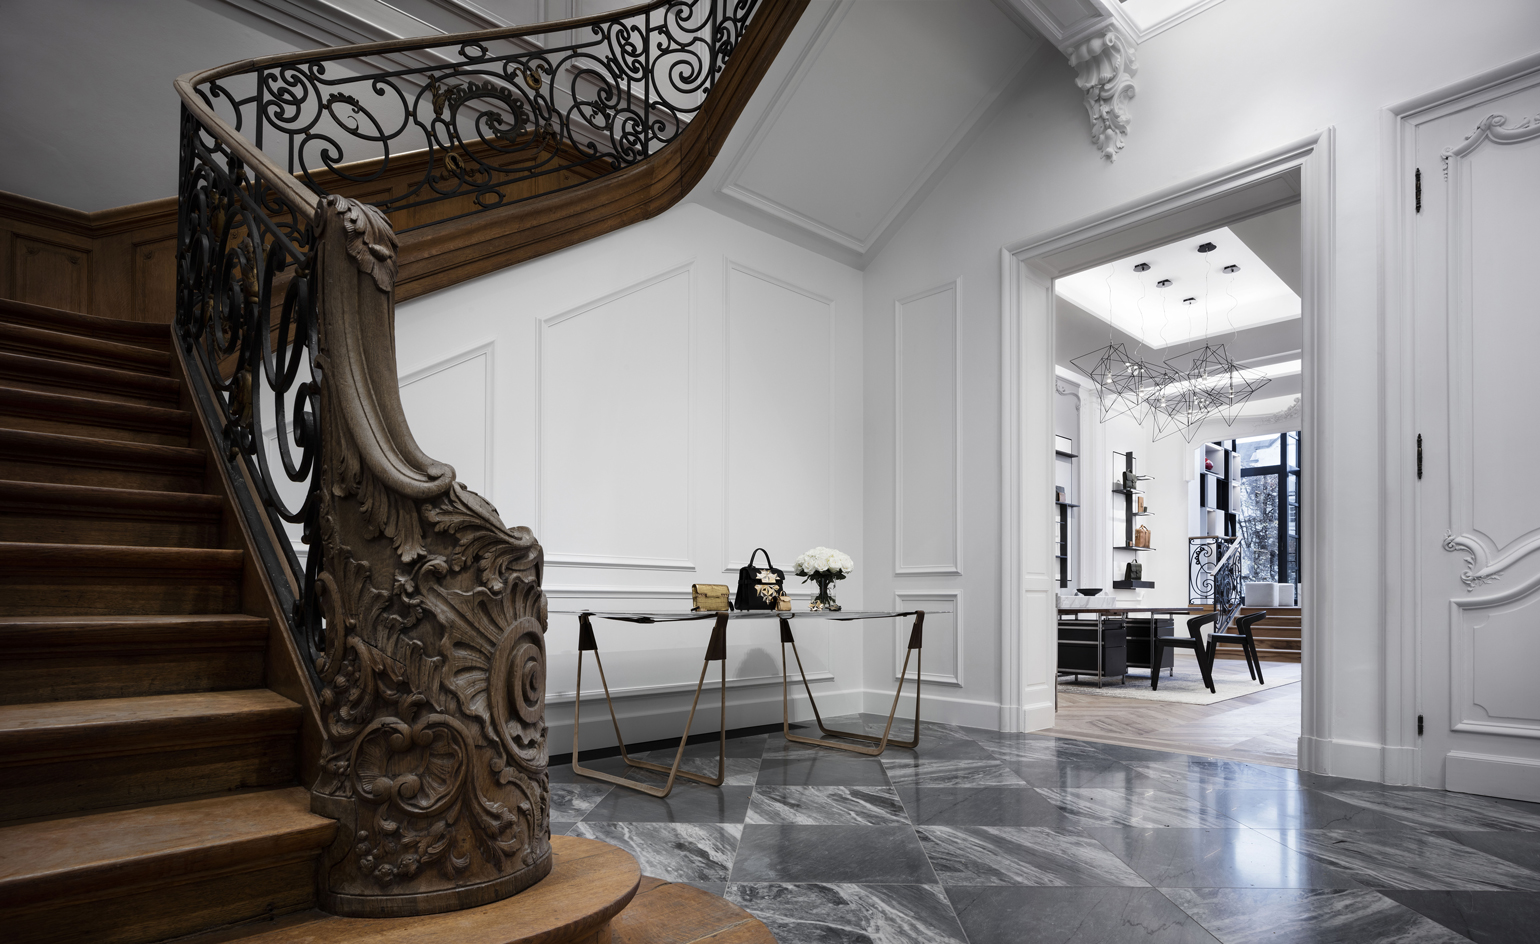 Peek into Belgian luxury leather purveyor Delvaux's flagship store, Le 27